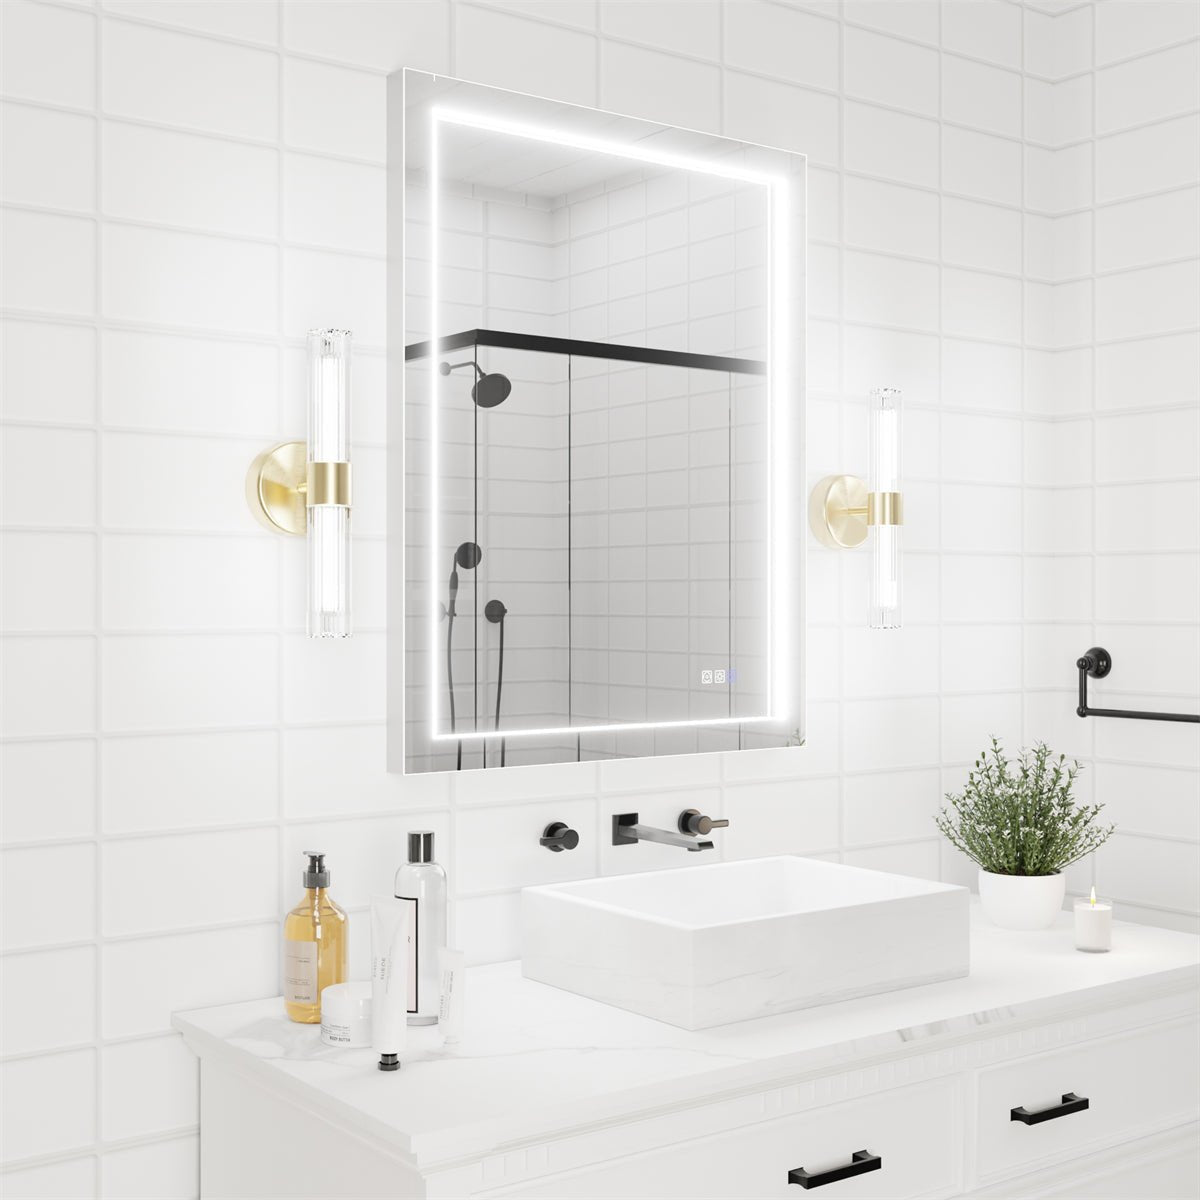 Ascend-M1d 28" x 36" Led Bathroom Mirror with Aluminum Frame